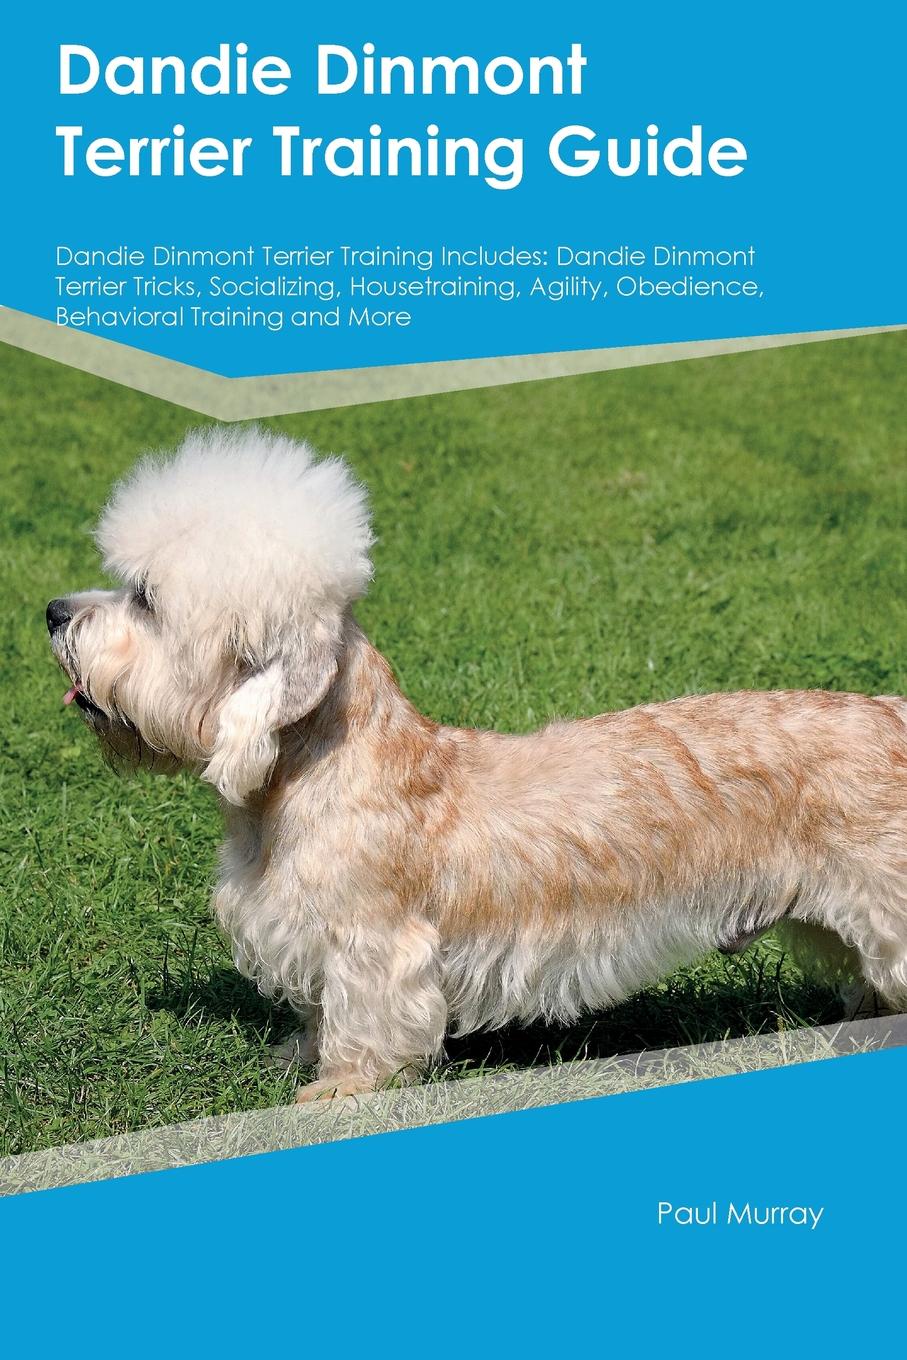 Dandie Dinmont Terrier Training Guide Dandie Dinmont Terrier Training Includes. Dandie Dinmont Terrier Tricks, Socializing, Housetraining, Agility, Obedience, Behavioral Training and More